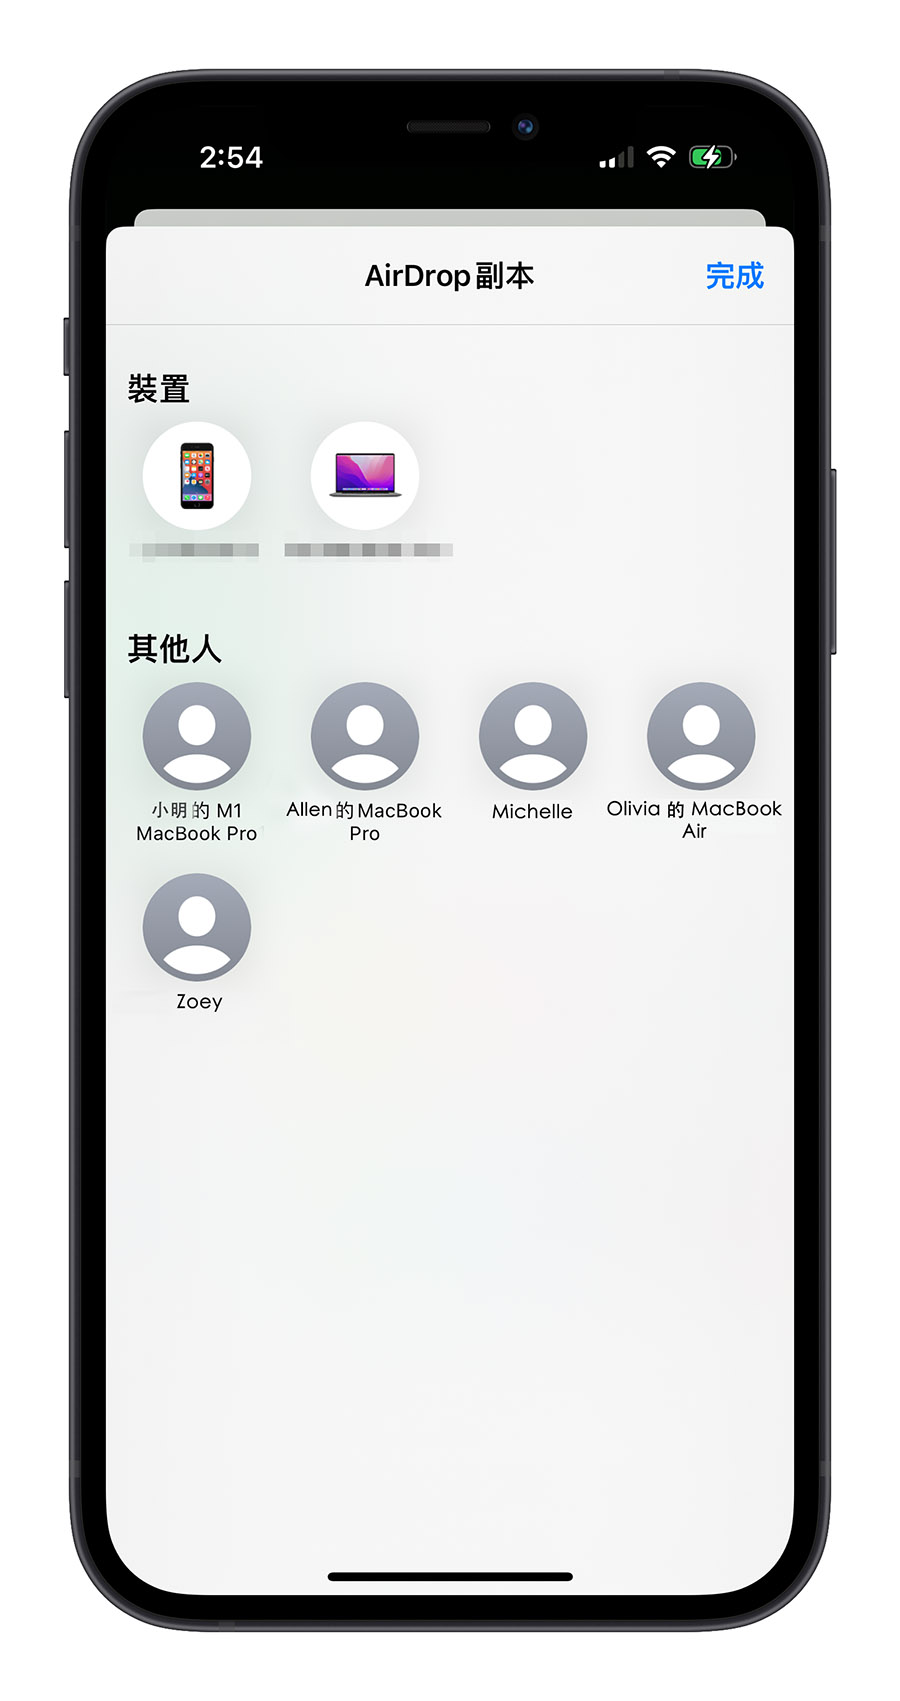 iOS 17 AirDrop 排序